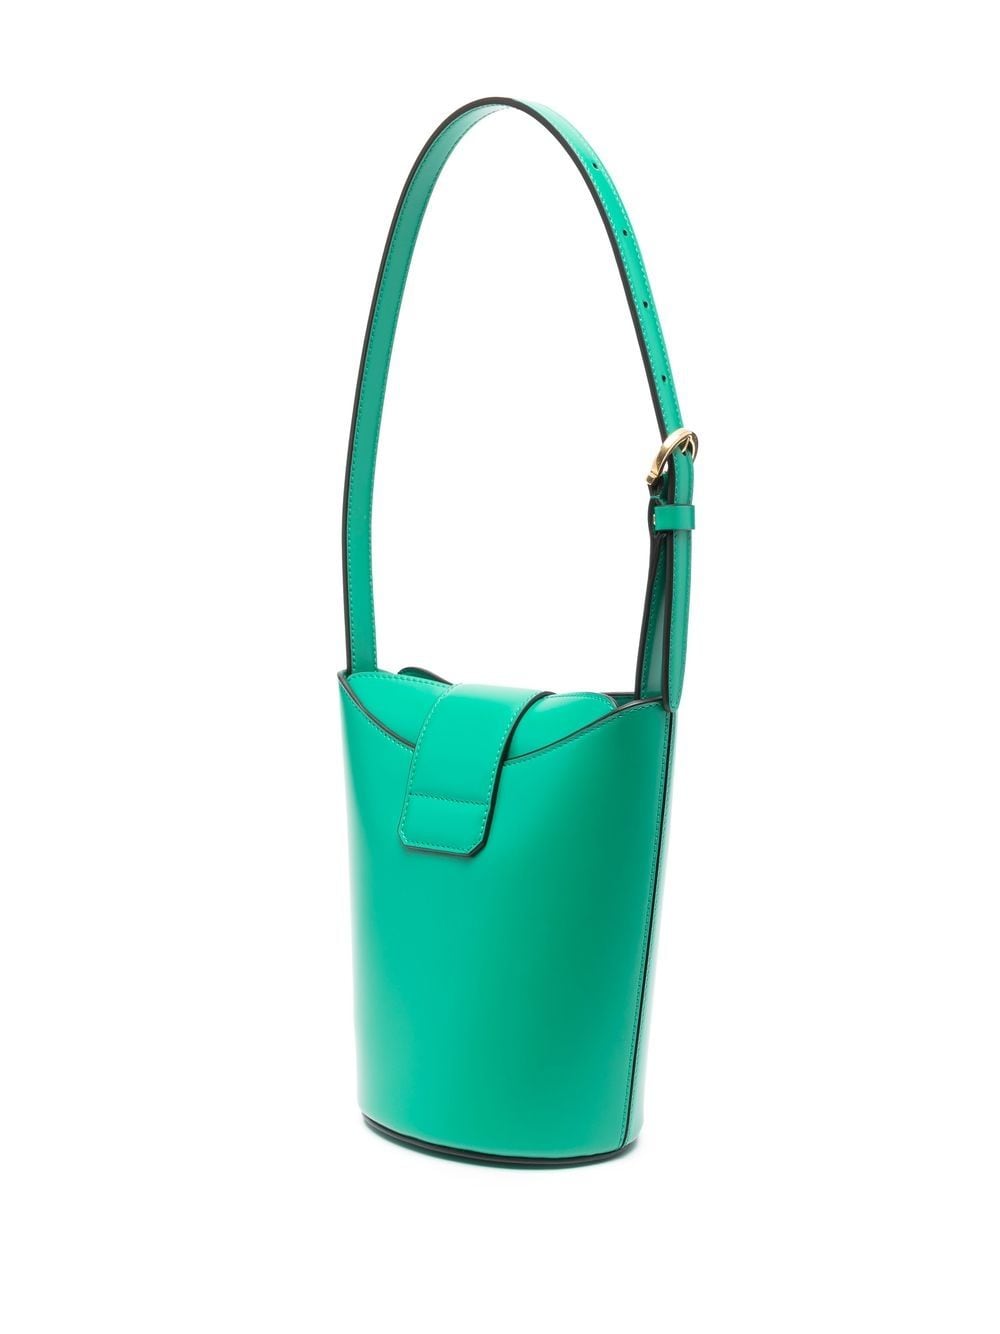 FERRAGAMO Bright Green 100% Leather Trifolio Bucket Handbag for Women - SS23 Collection